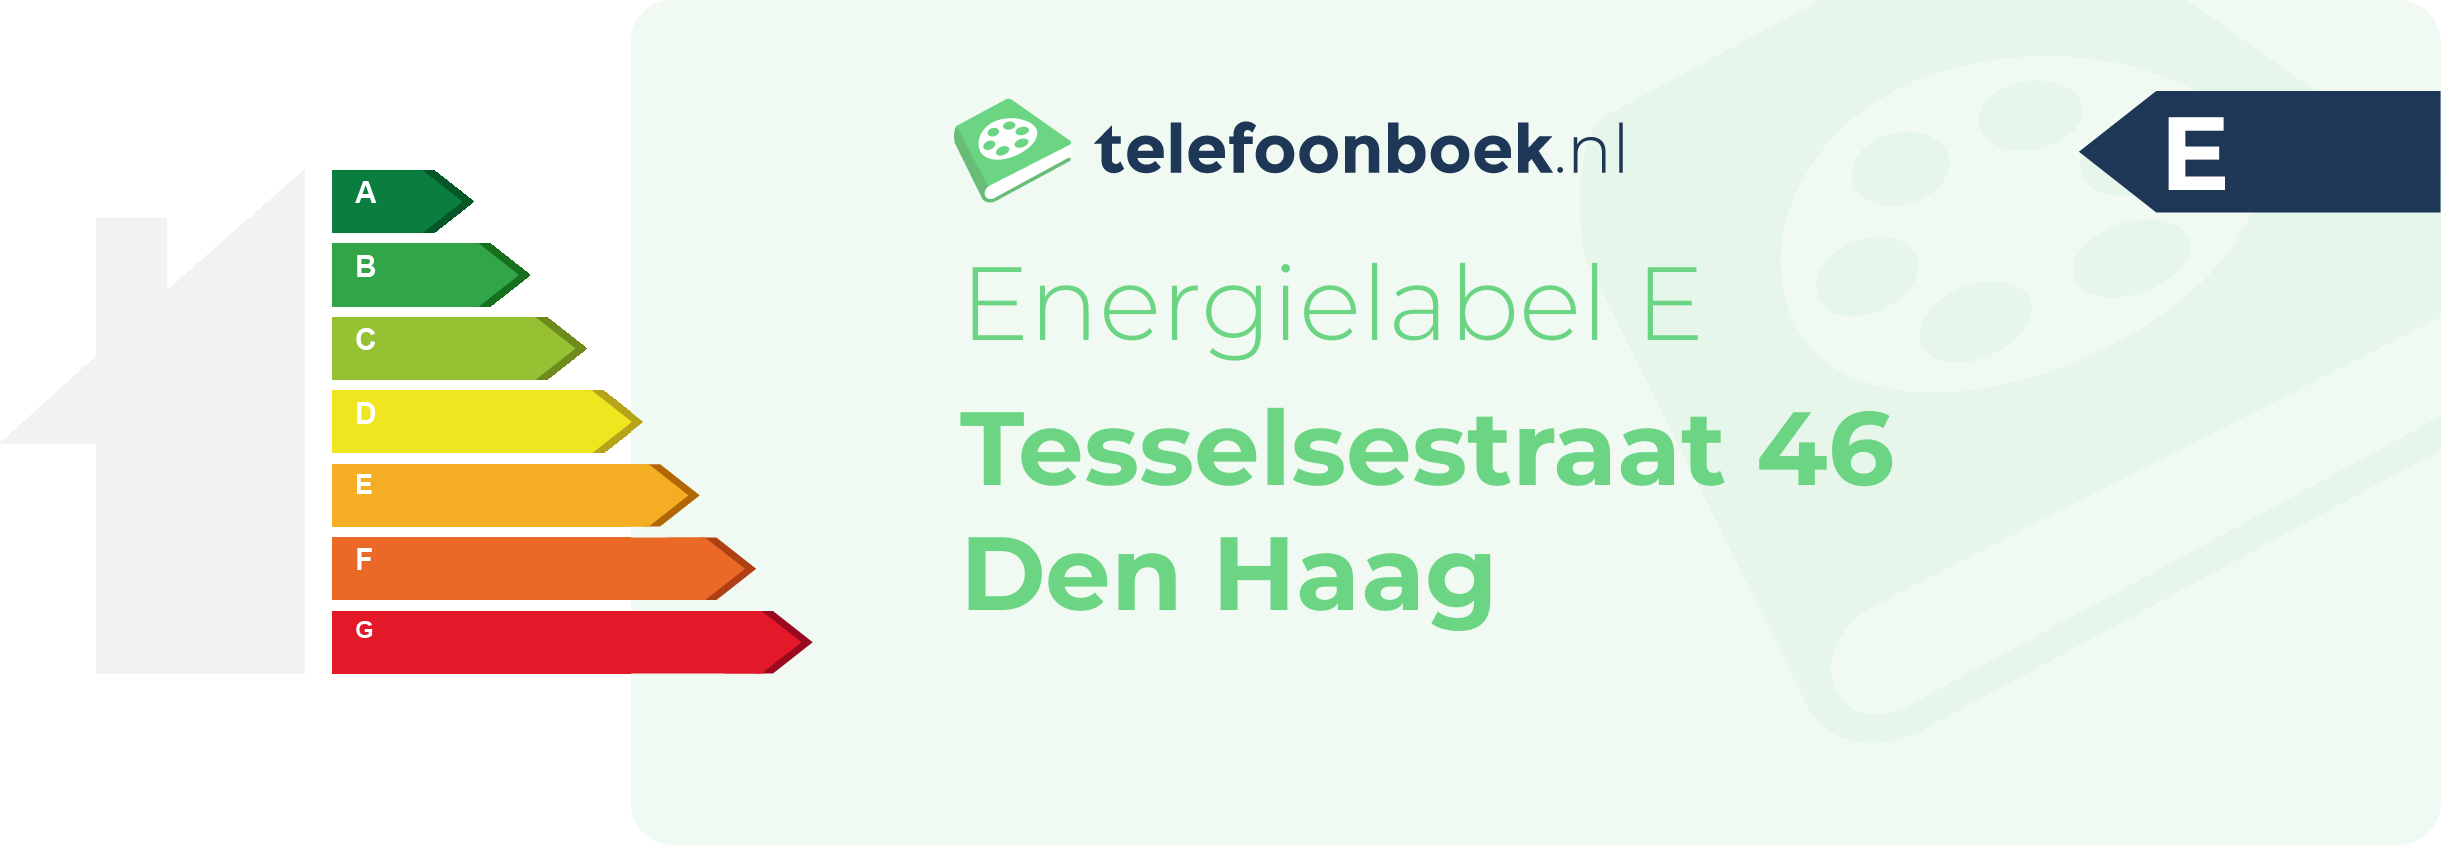 Energielabel Tesselsestraat 46 Den Haag